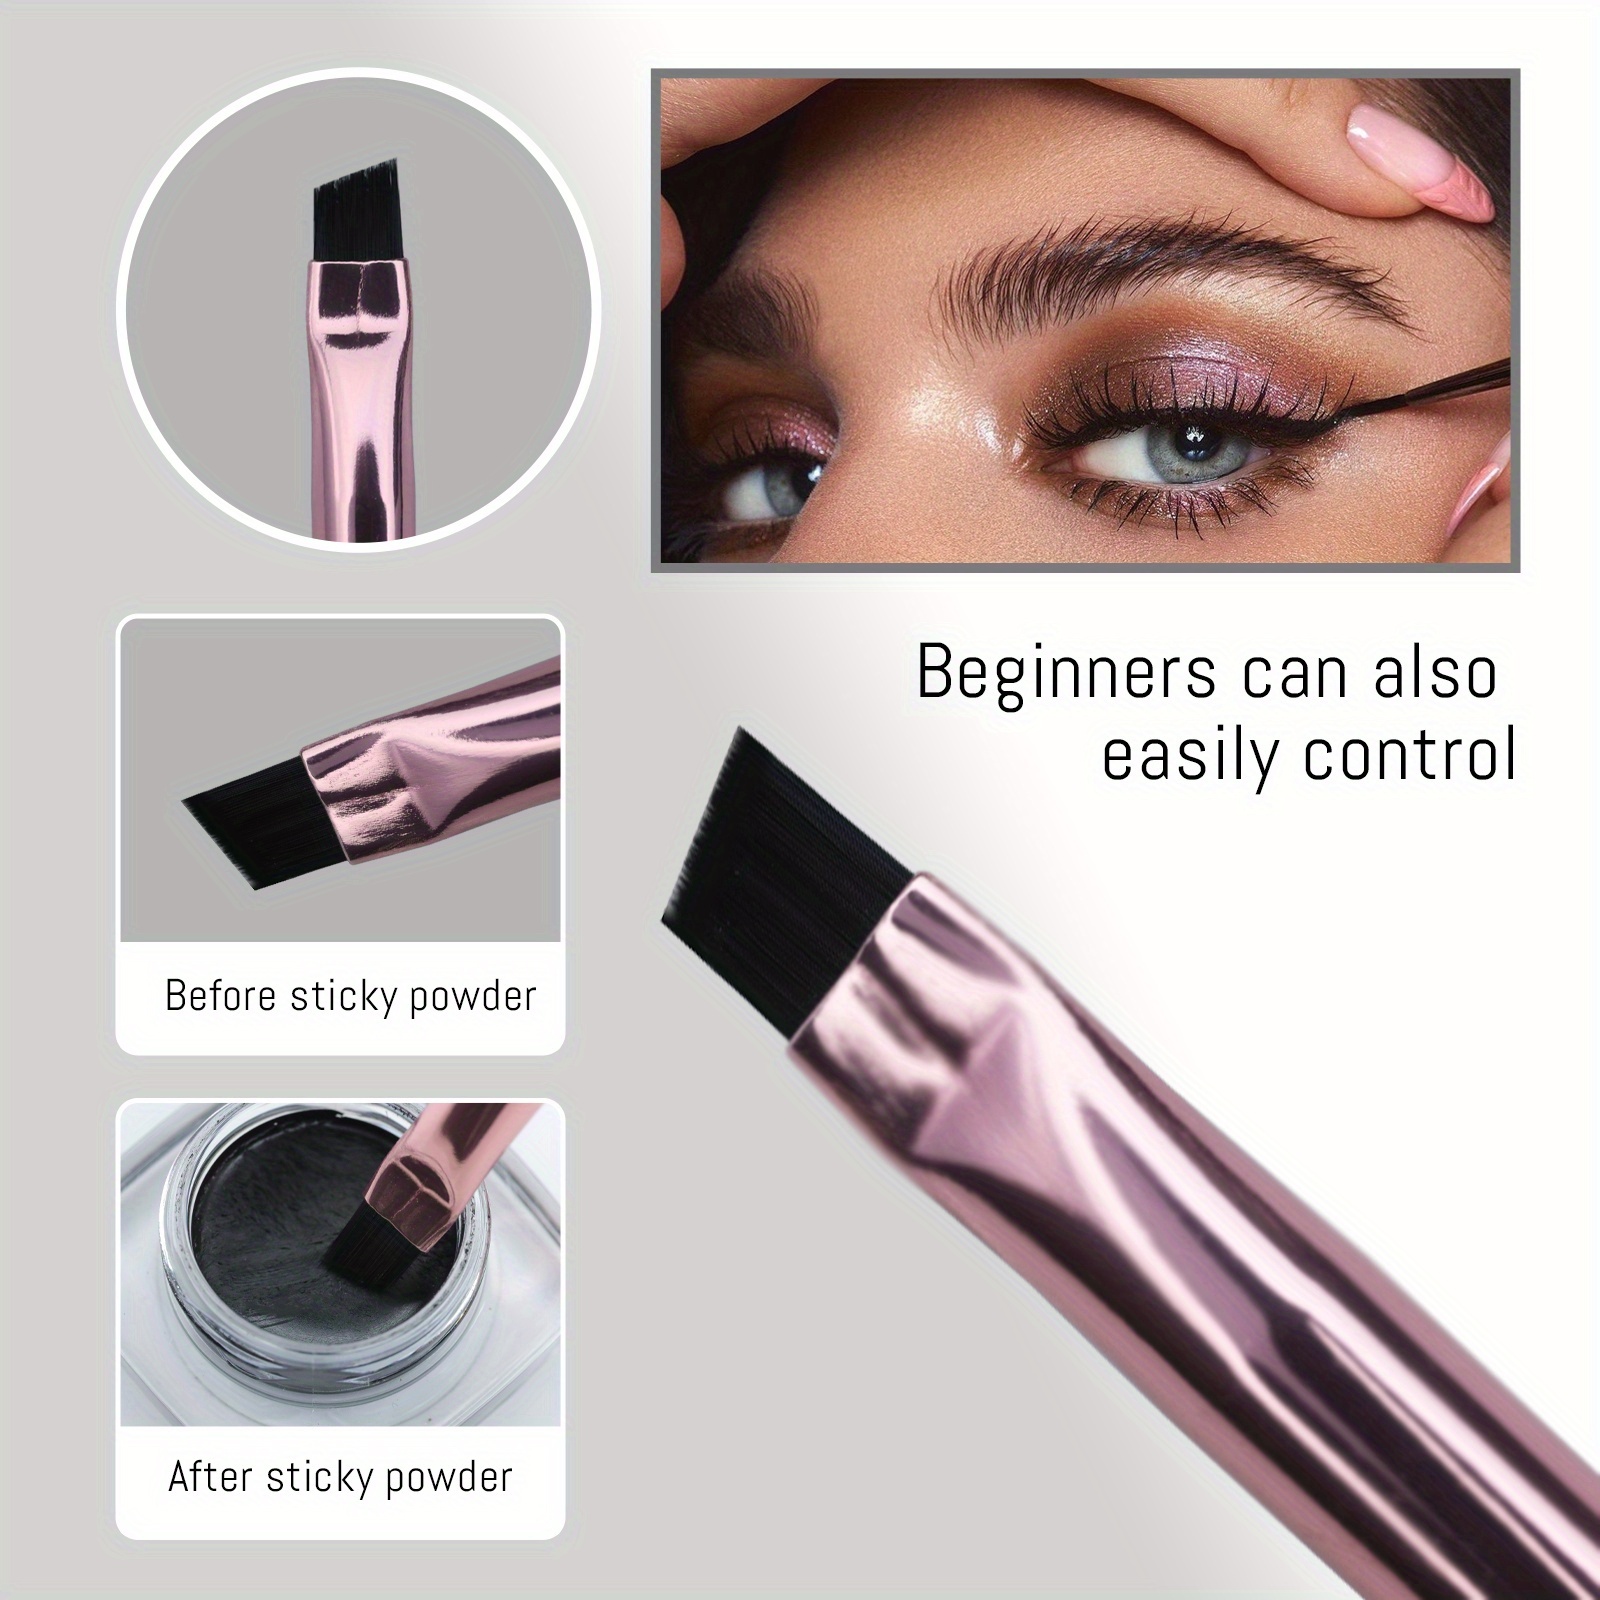 ALBEAUT Eyeliner Brow Brush Angled Thin Gel Liner Makeup Brush